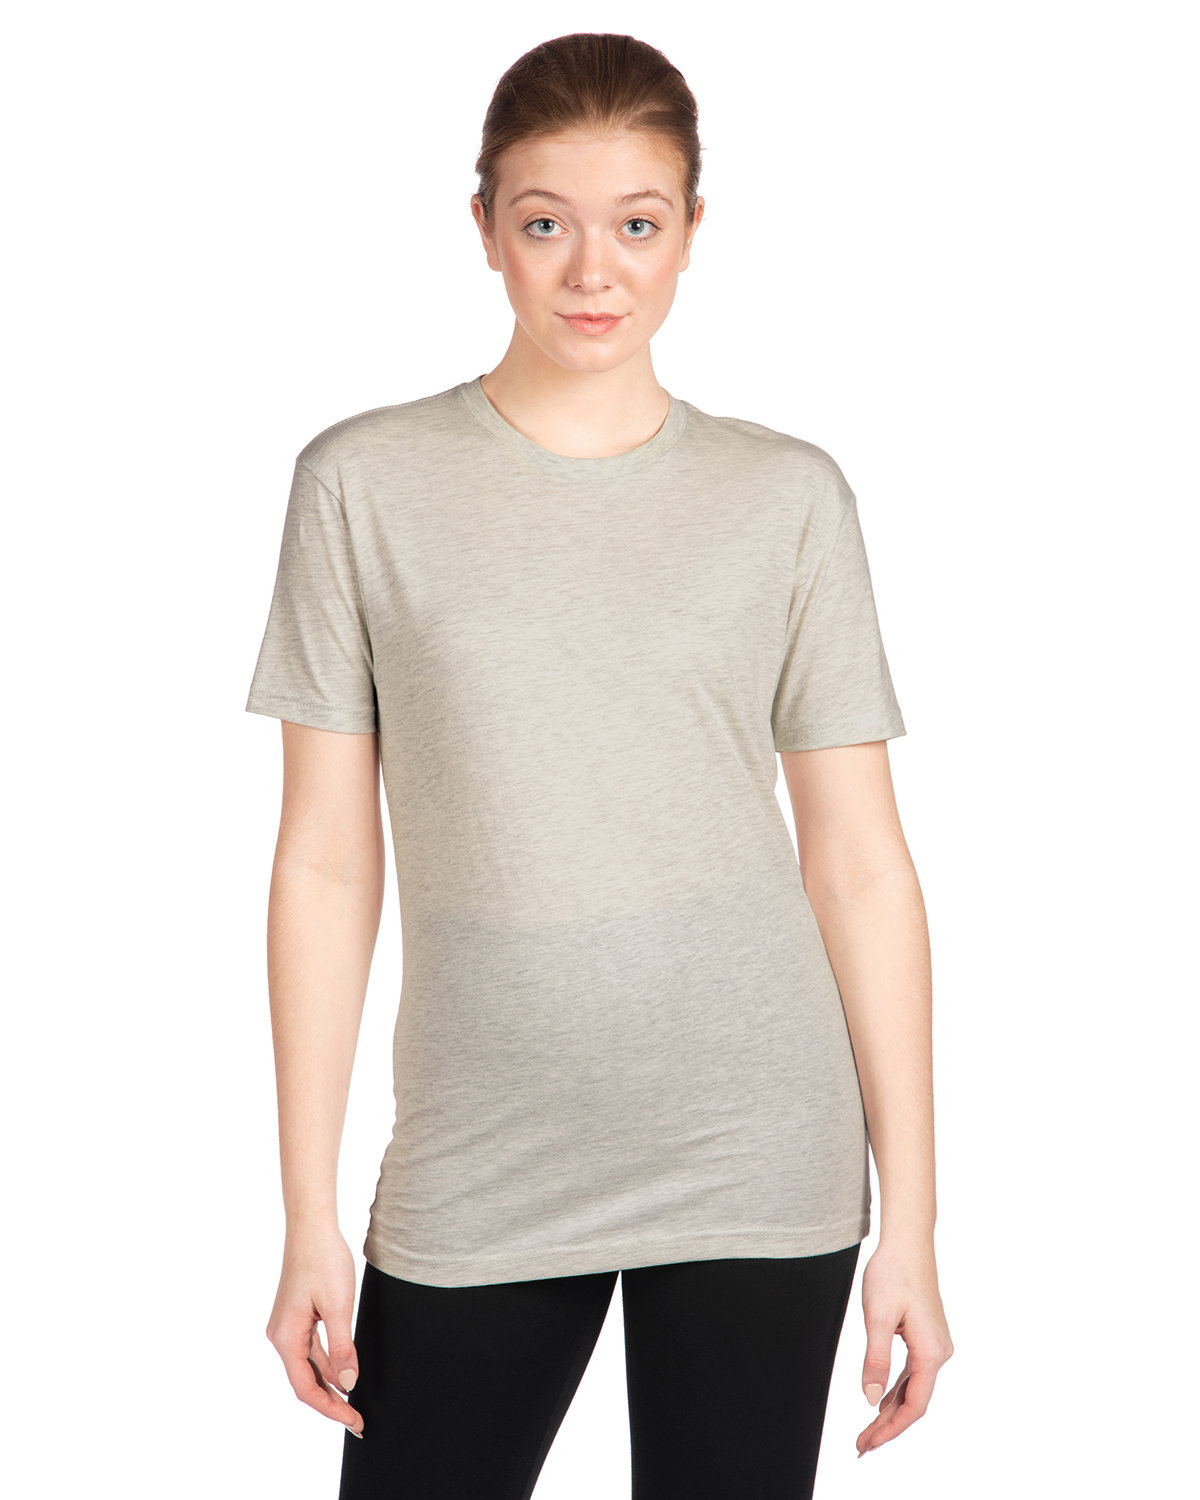 Next Level Unisex Cotton T-Shirt OATMEAL 